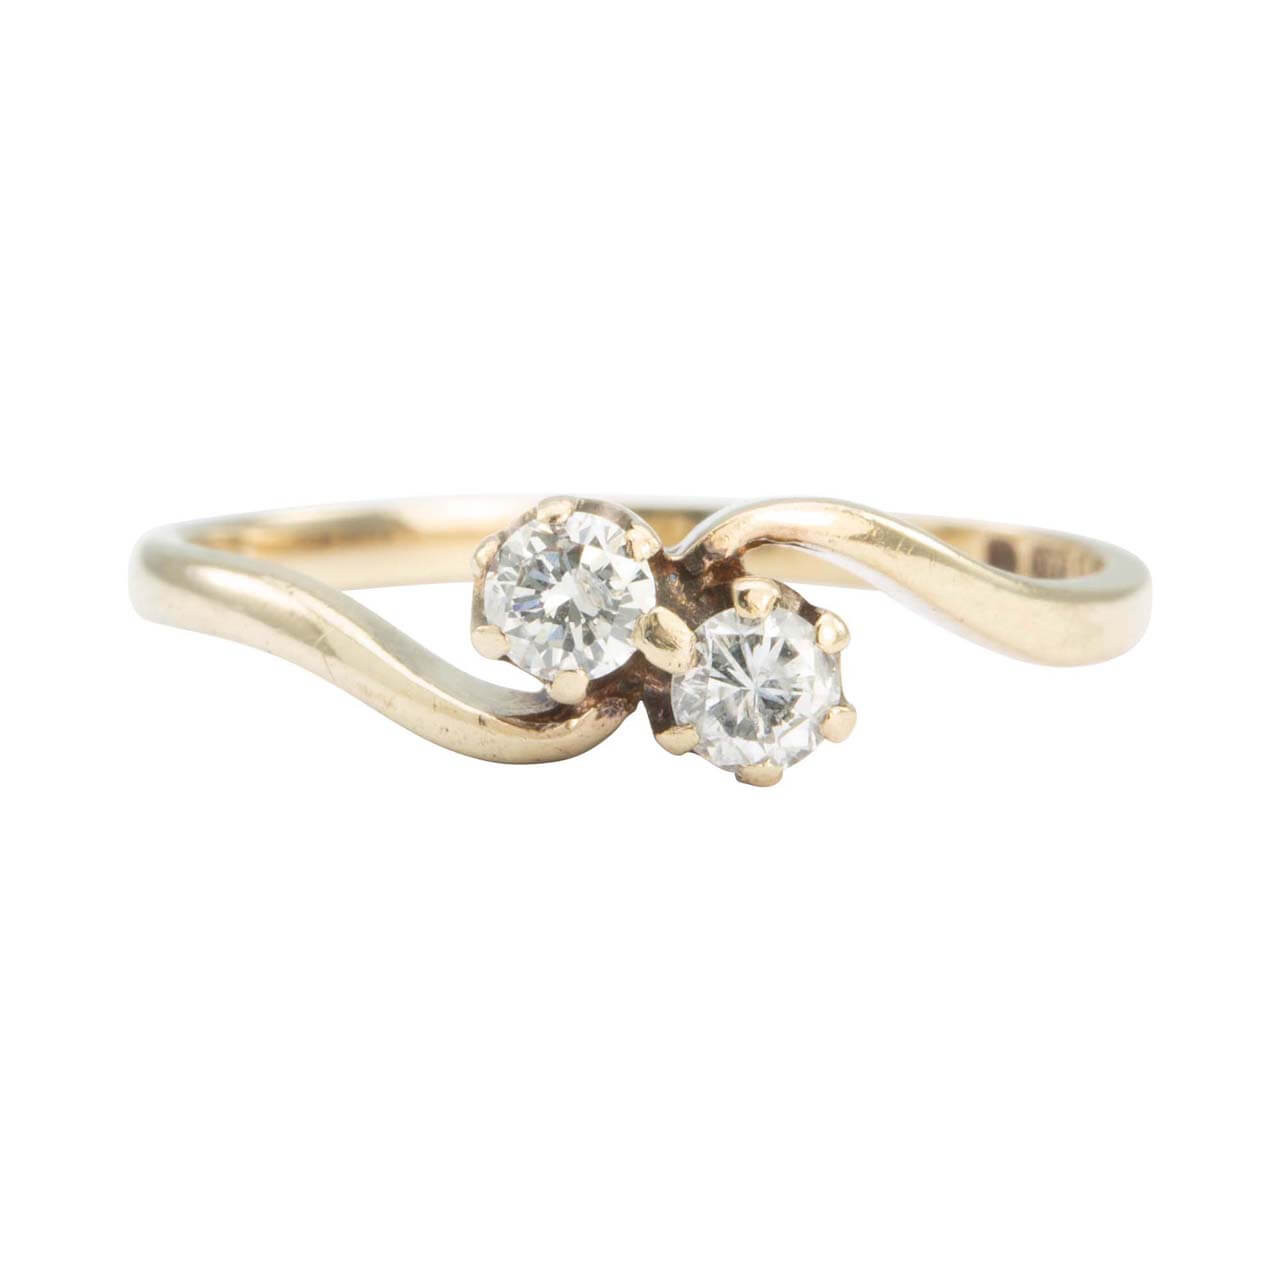 The Vintage Brilliant Cut Diamond Twist Ring | 993780 |  Sellingantiques.co.uk